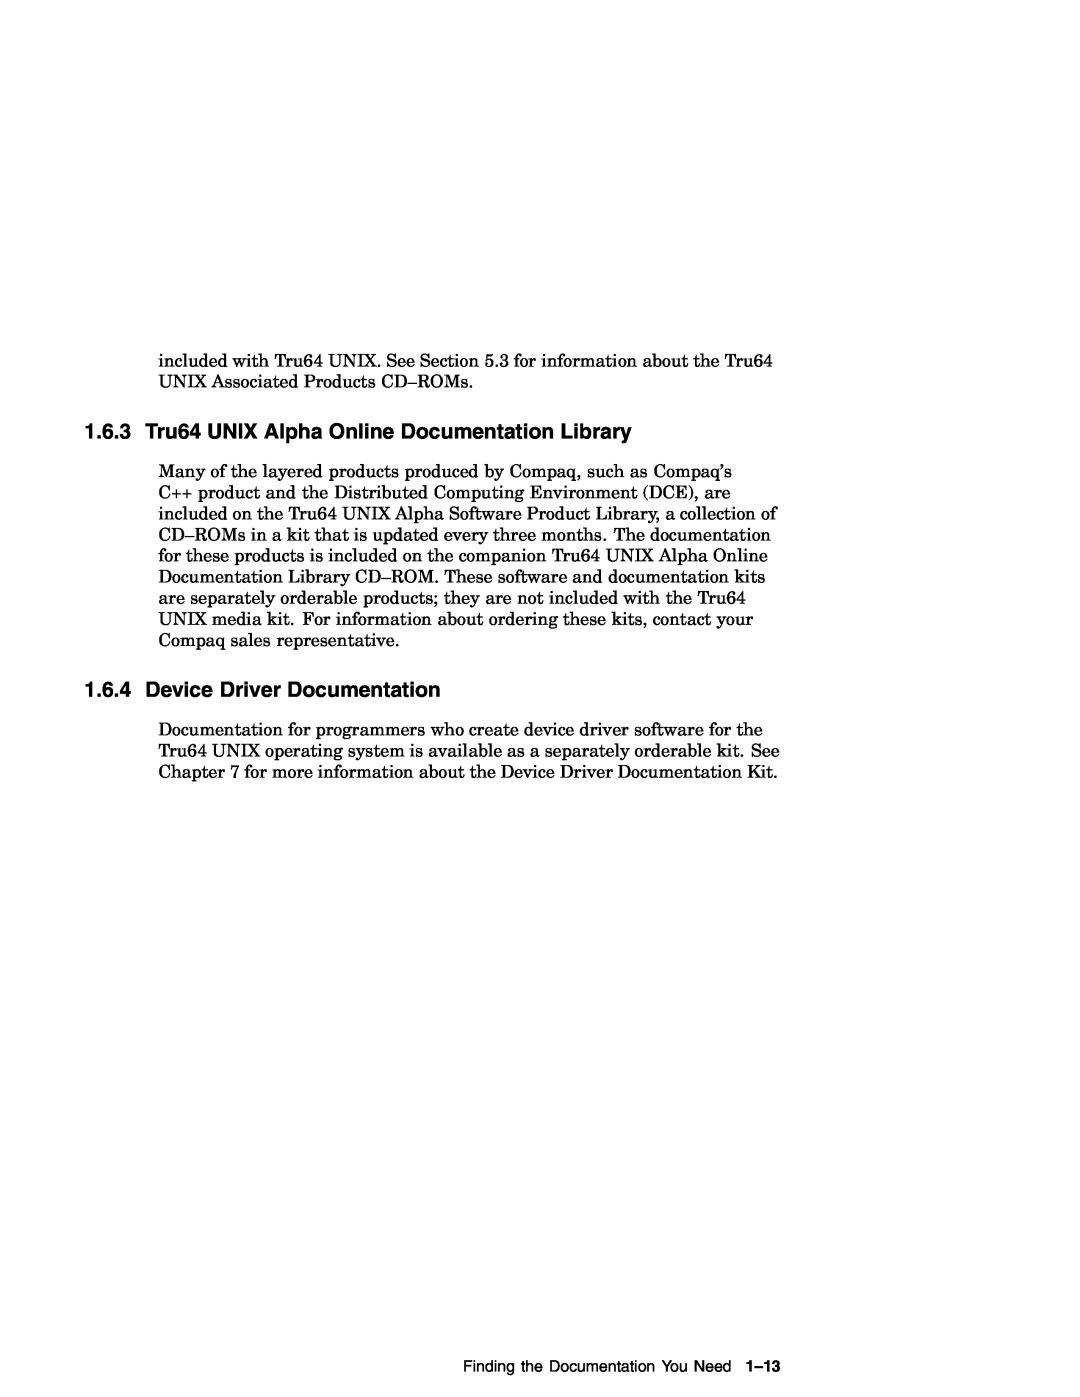 Compaq AA-RH8RD-TE manual 1.6.3 Tru64 UNIX Alpha Online Documentation Library, Device Driver Documentation 